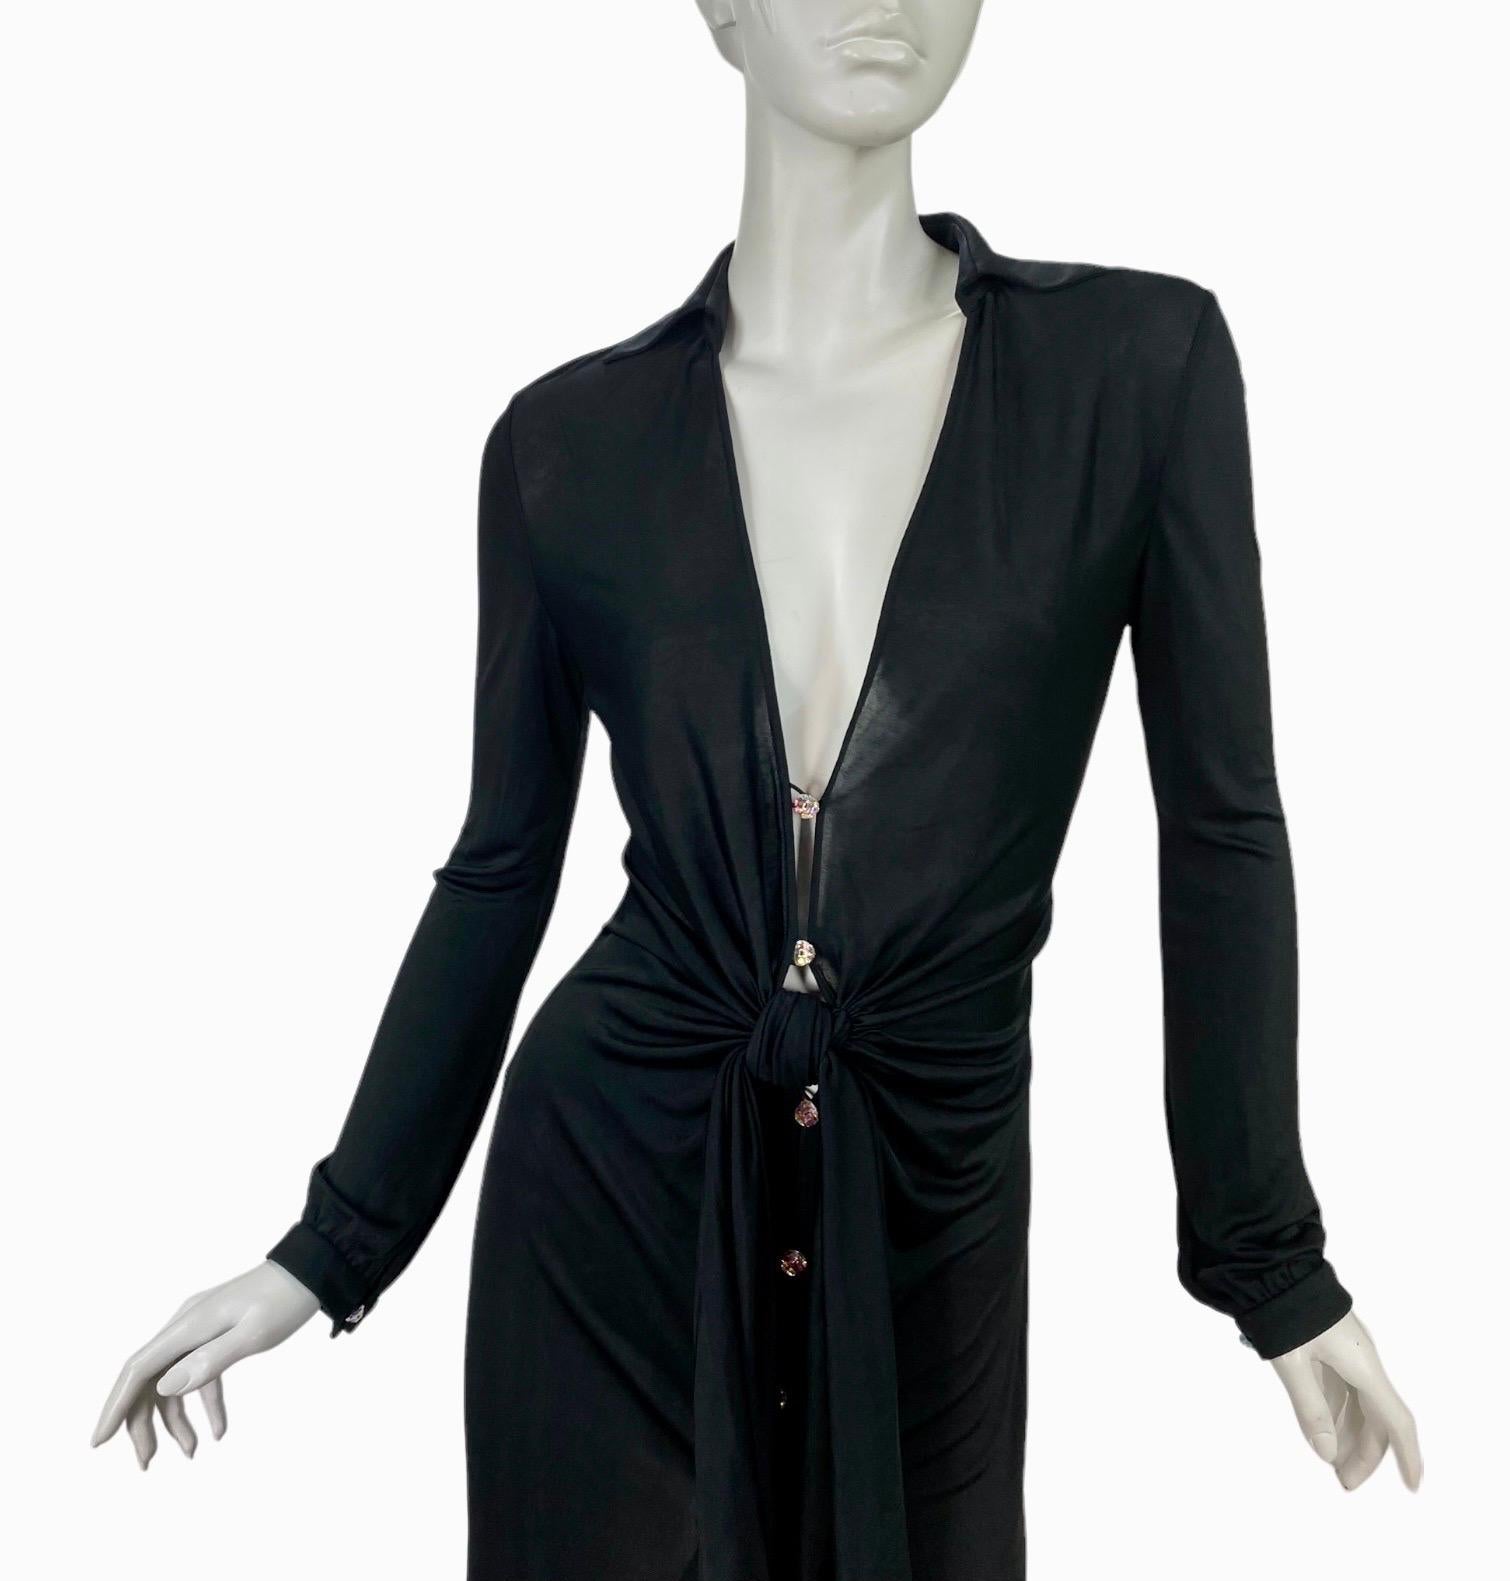 S/S 2000 Vintage Gianni Versace Couture Runway Black Deep V-Neck Dress For Sale 7